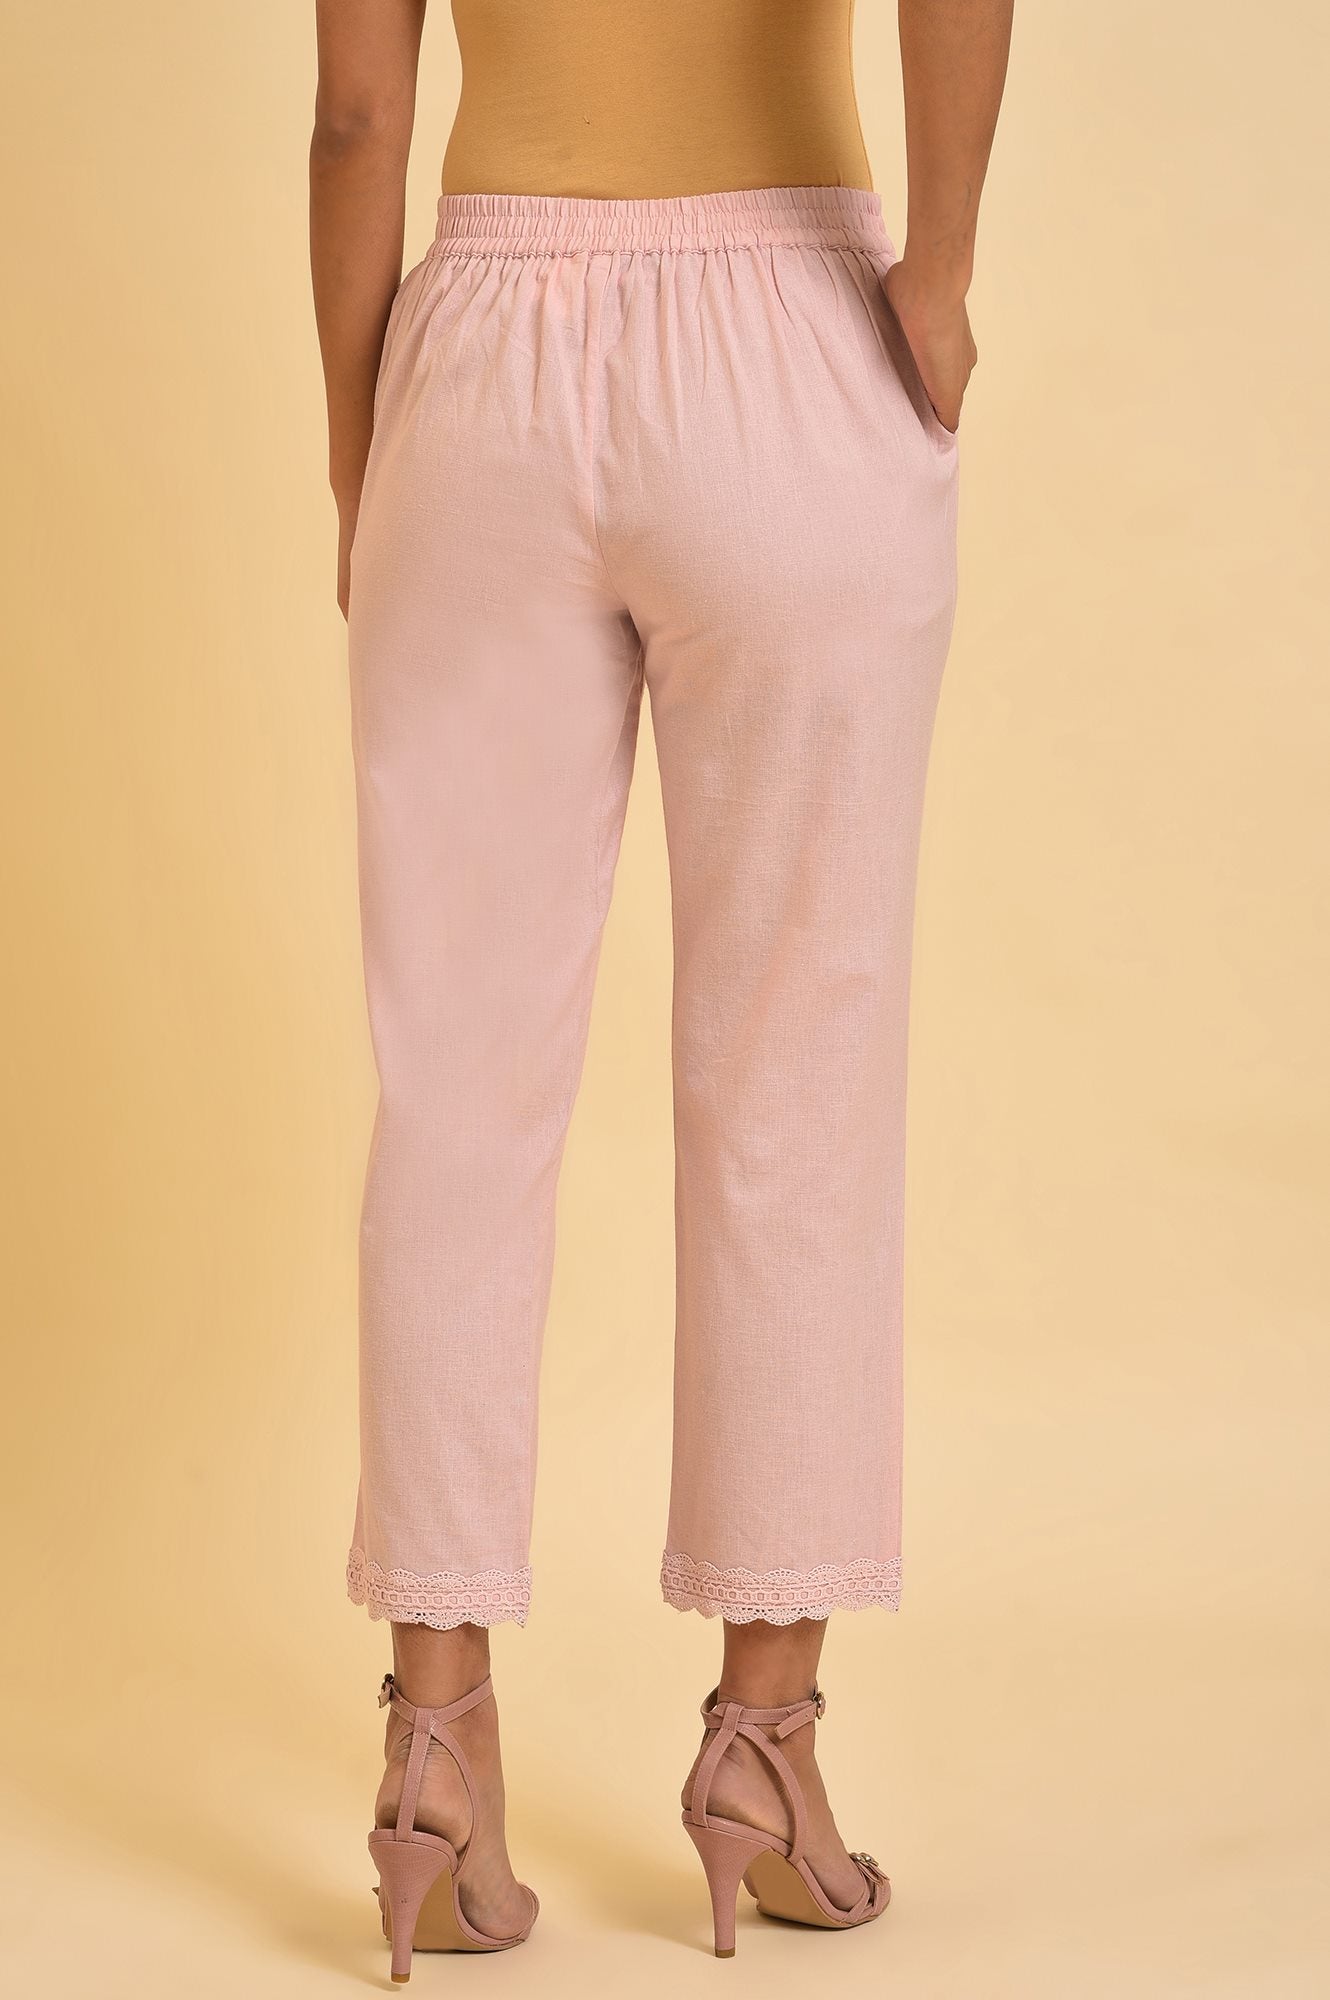 Light Pink Lace Slim Pants